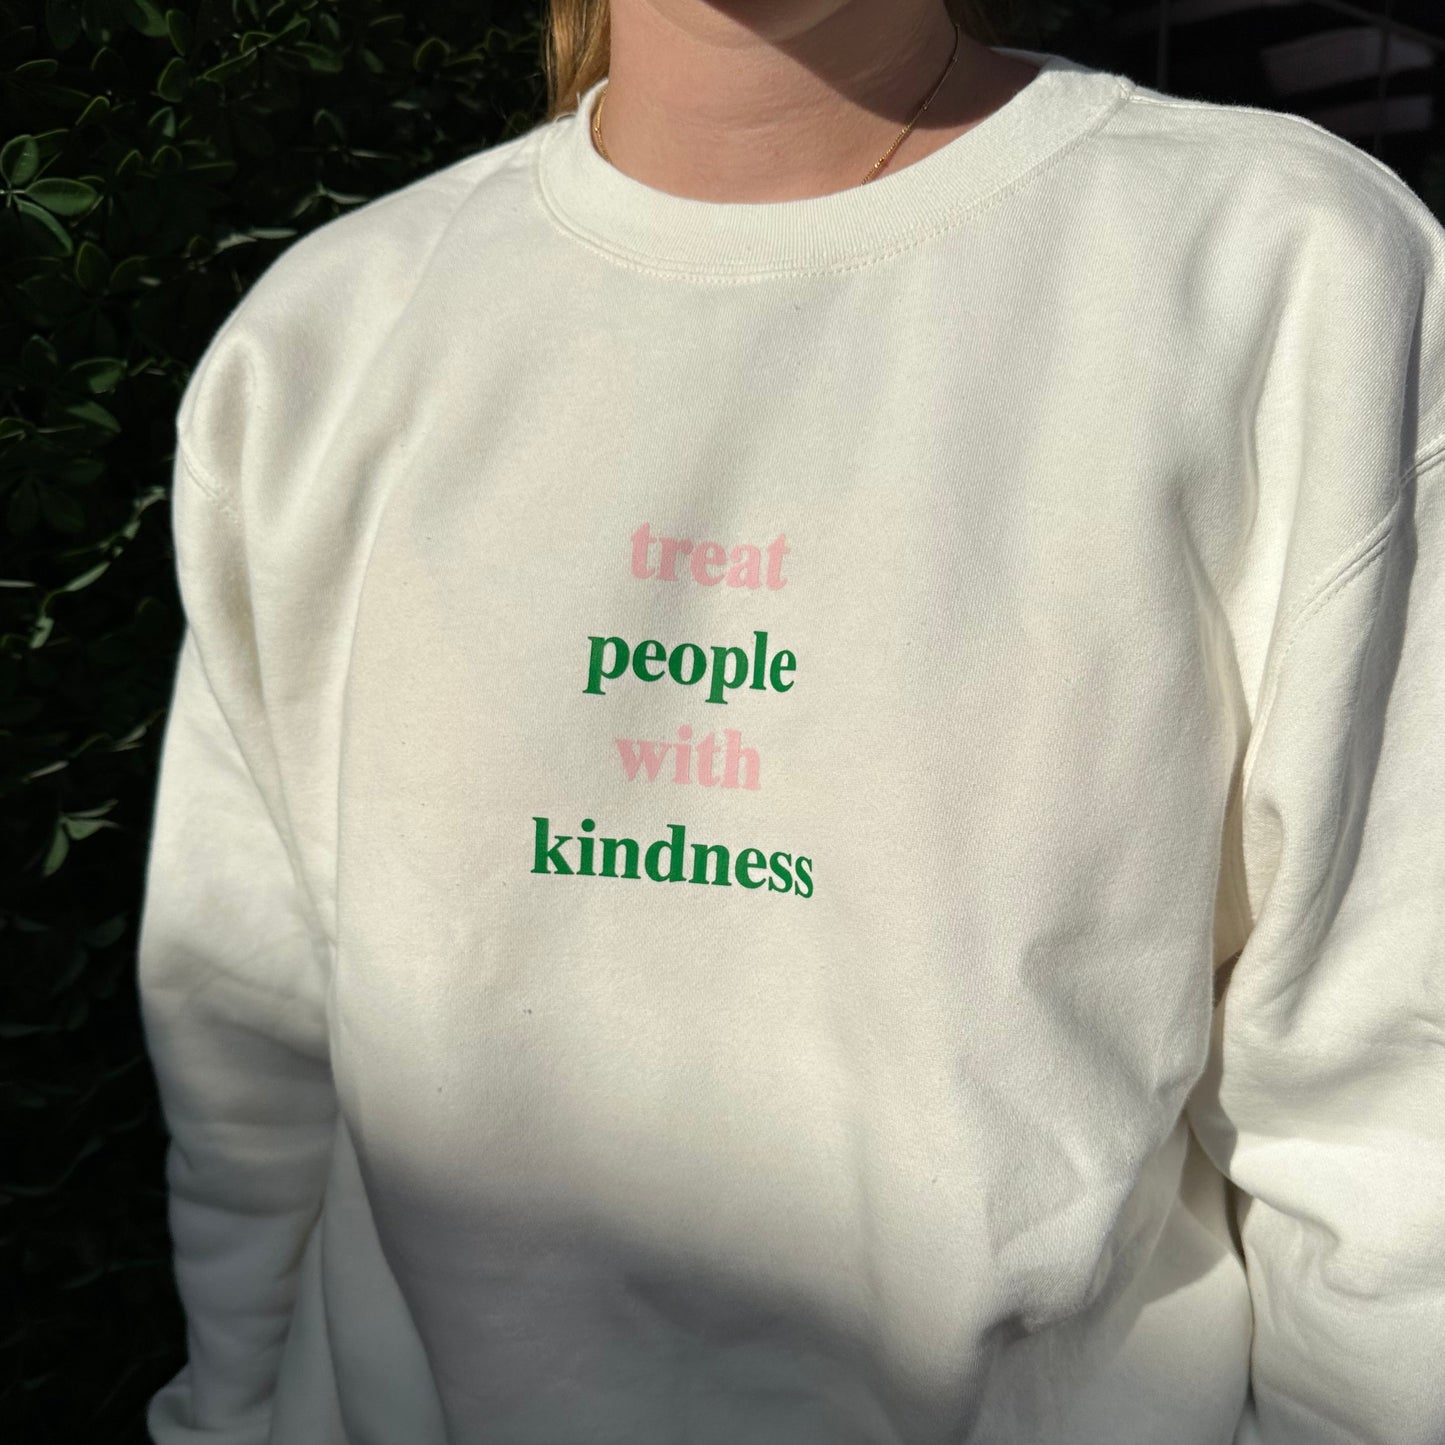 Treat people with kindness Sweatshirt